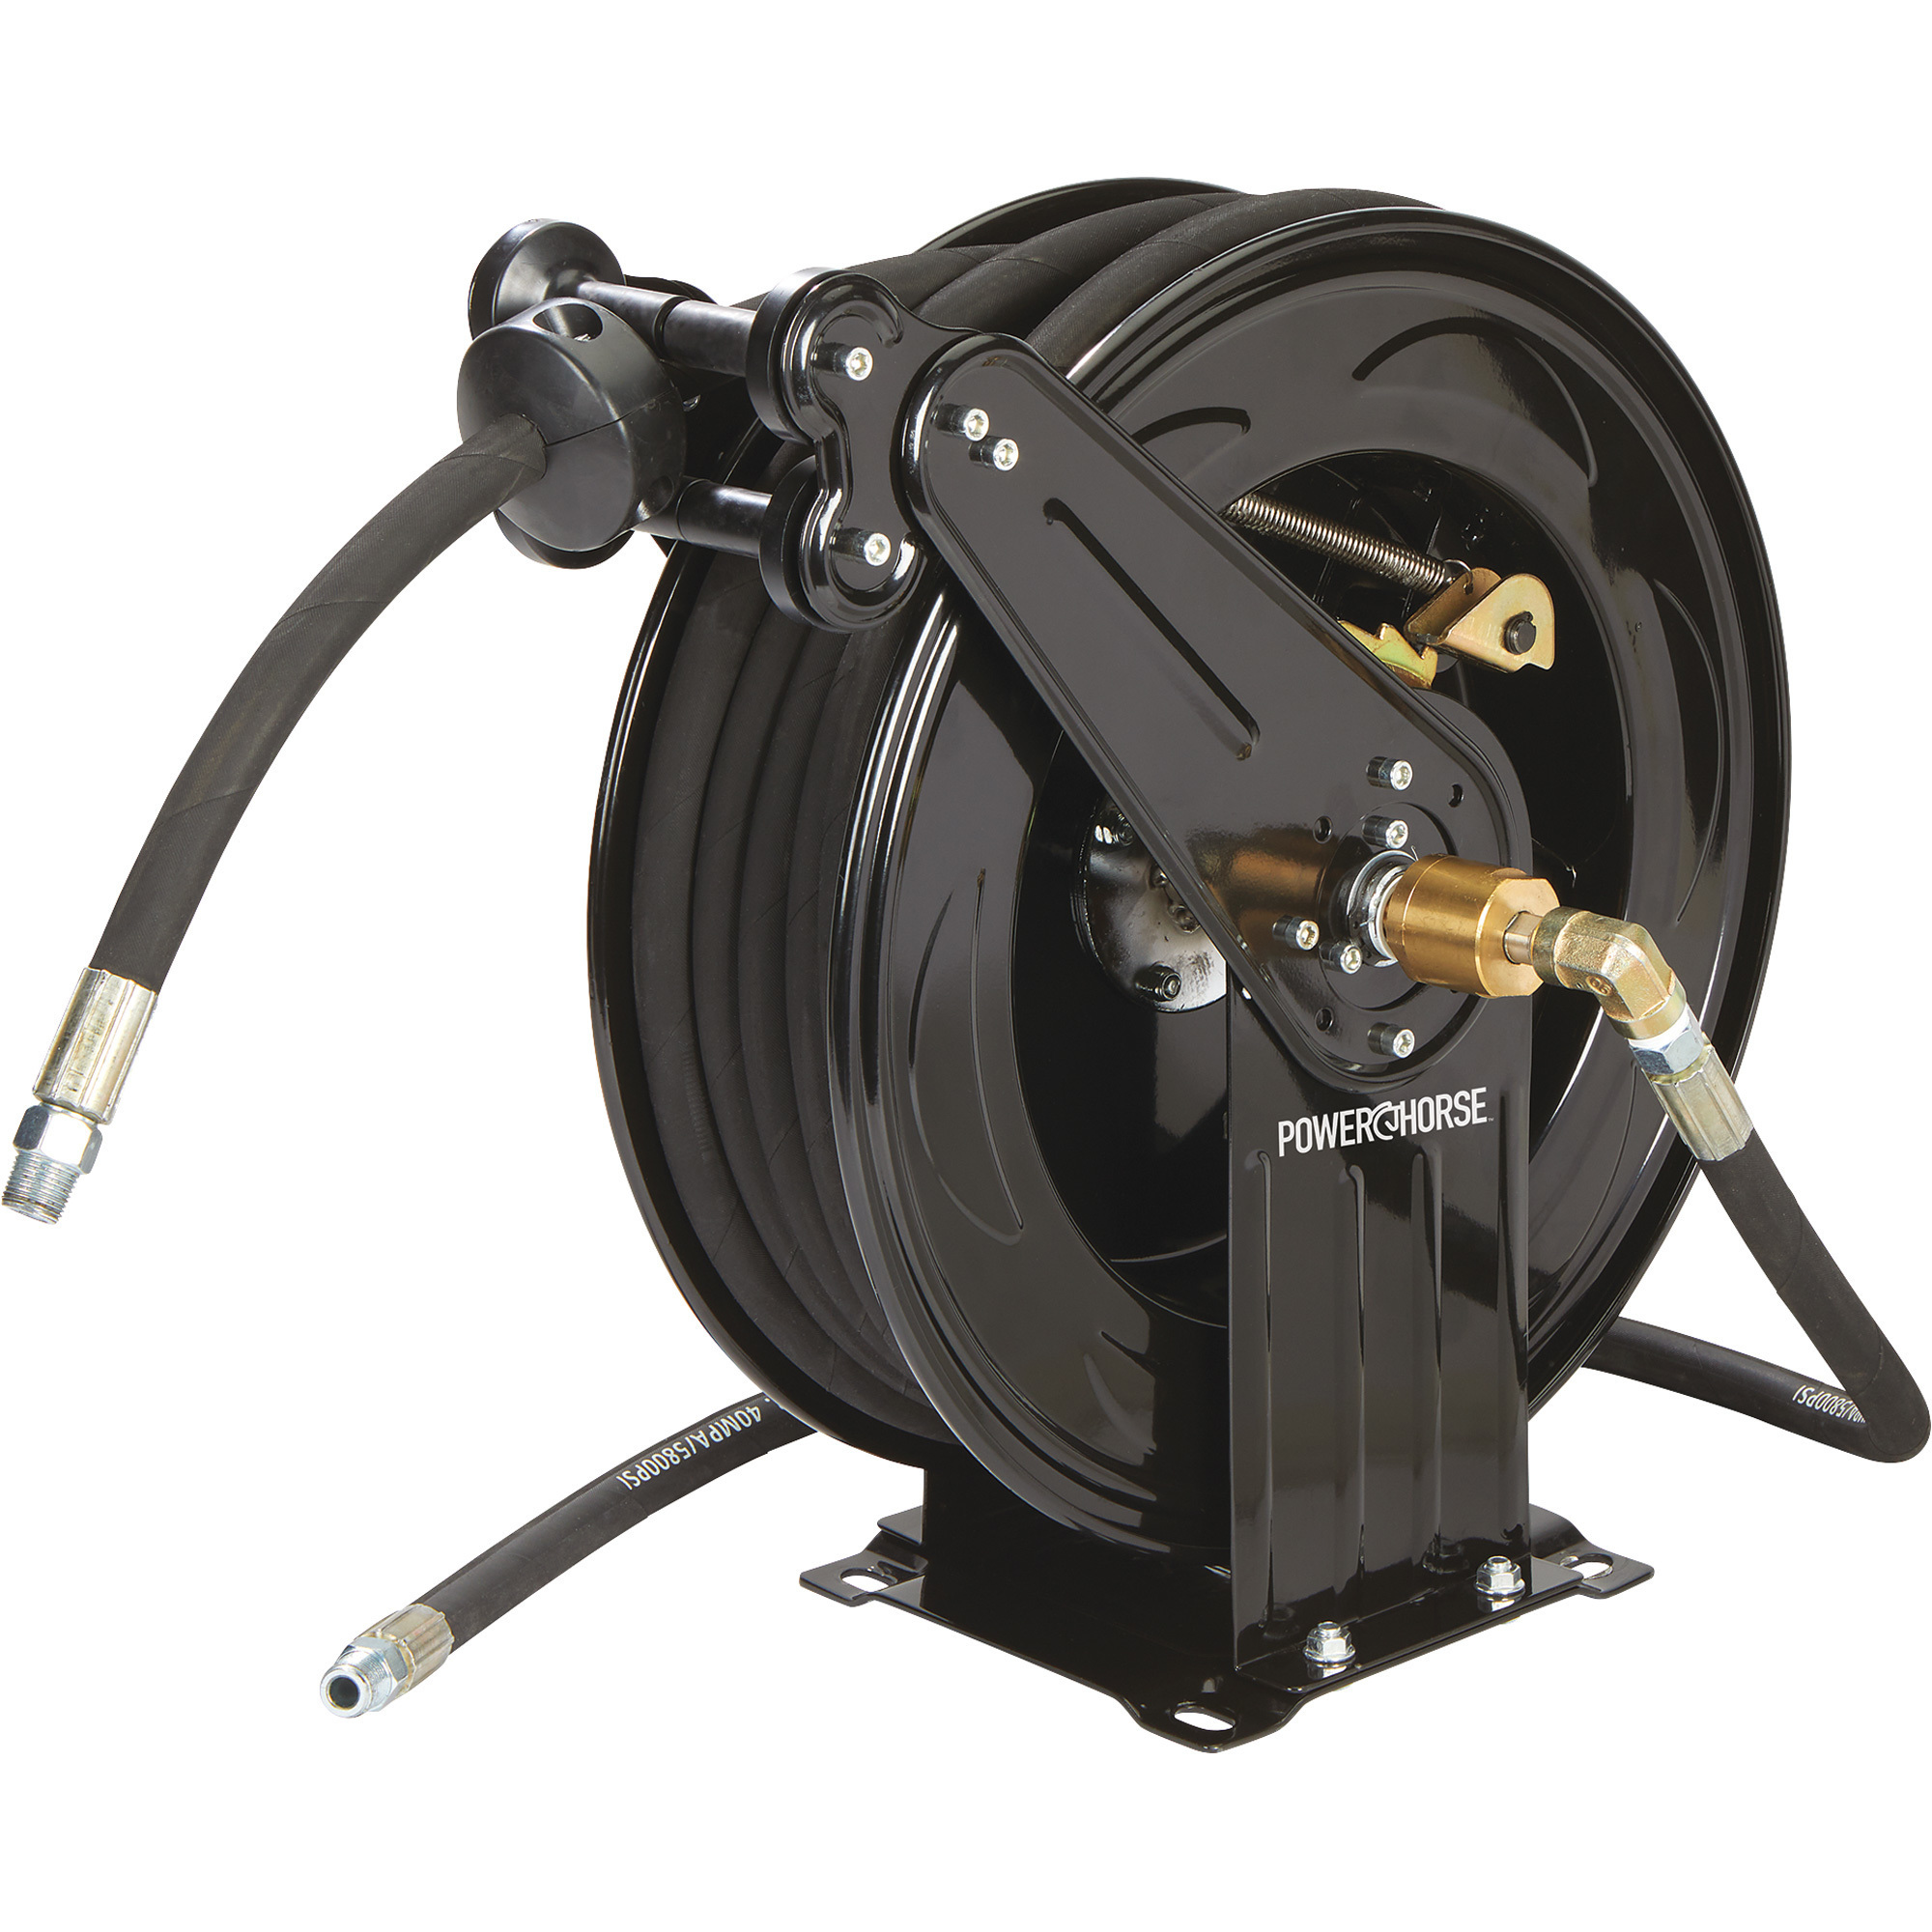 Powerhorse Auto-Rewind Pressure Washer Hose Reel, 4000 PSI, 50ft